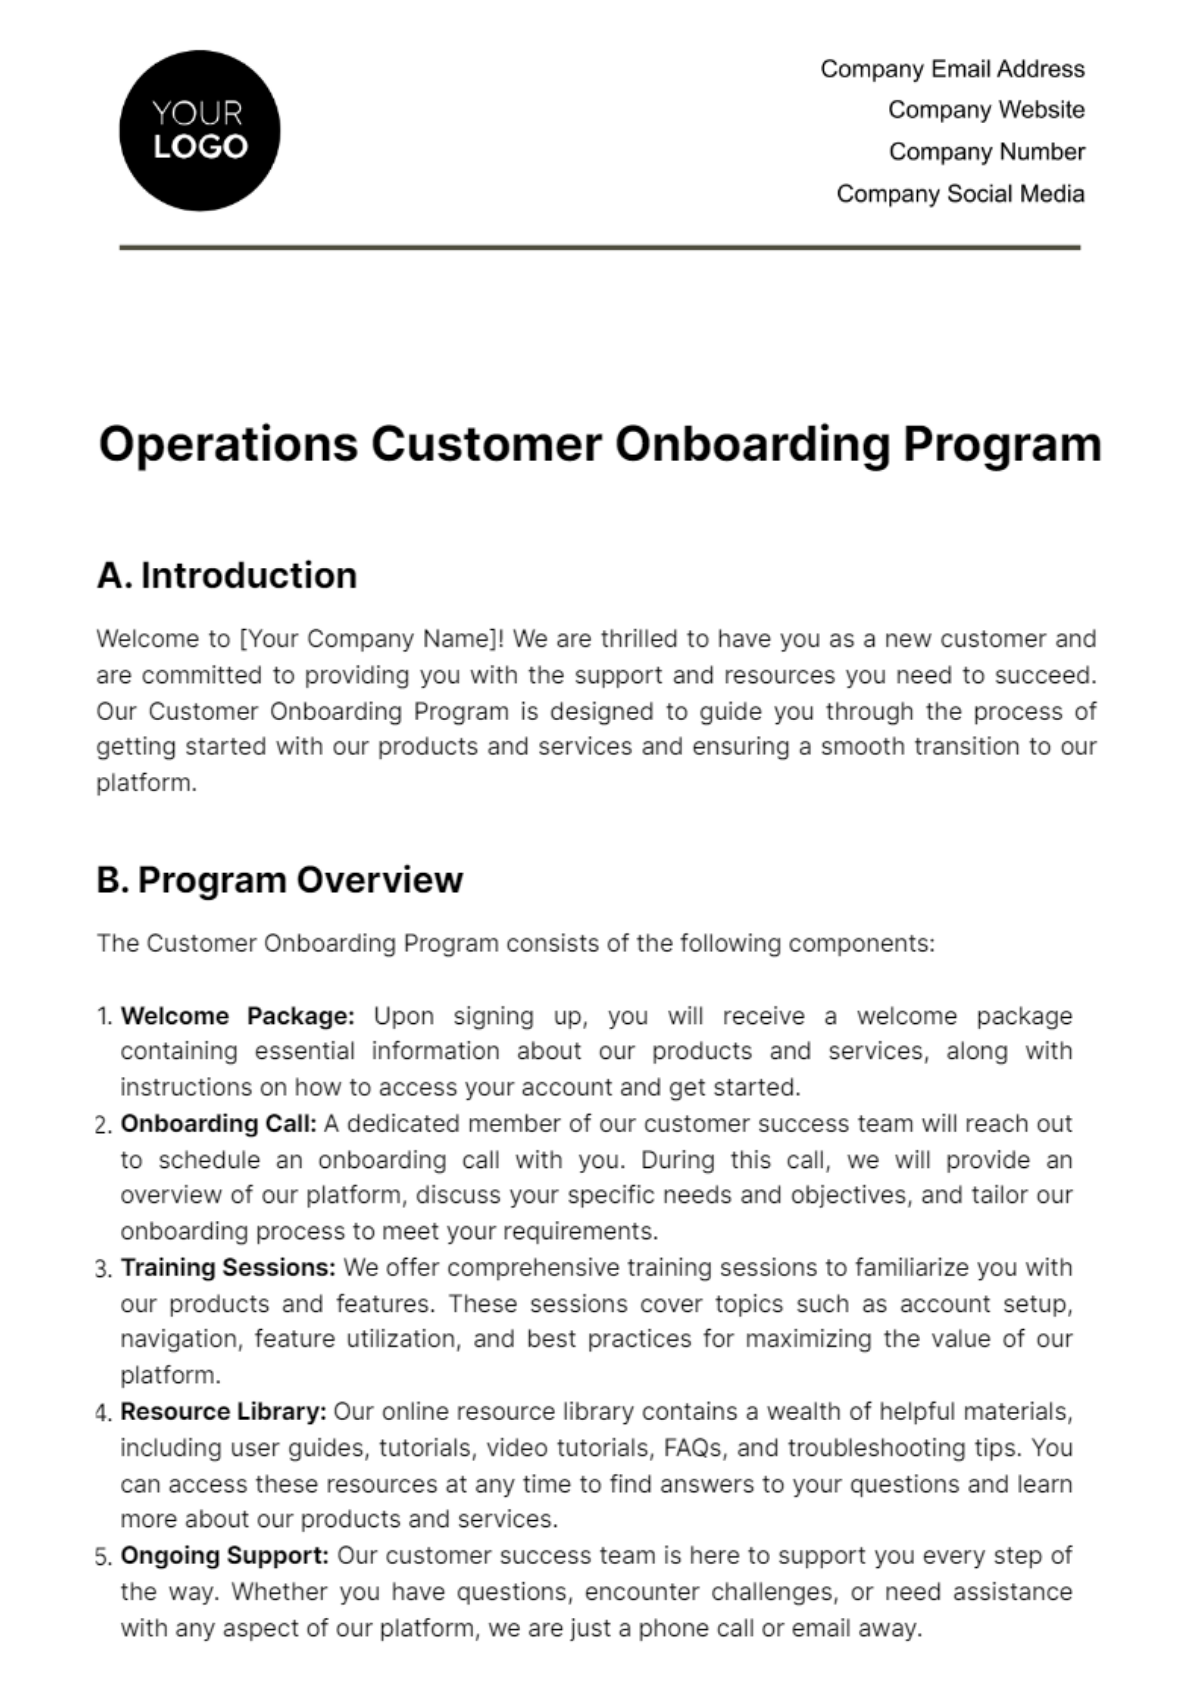 Operations Customer Onboarding Program Template